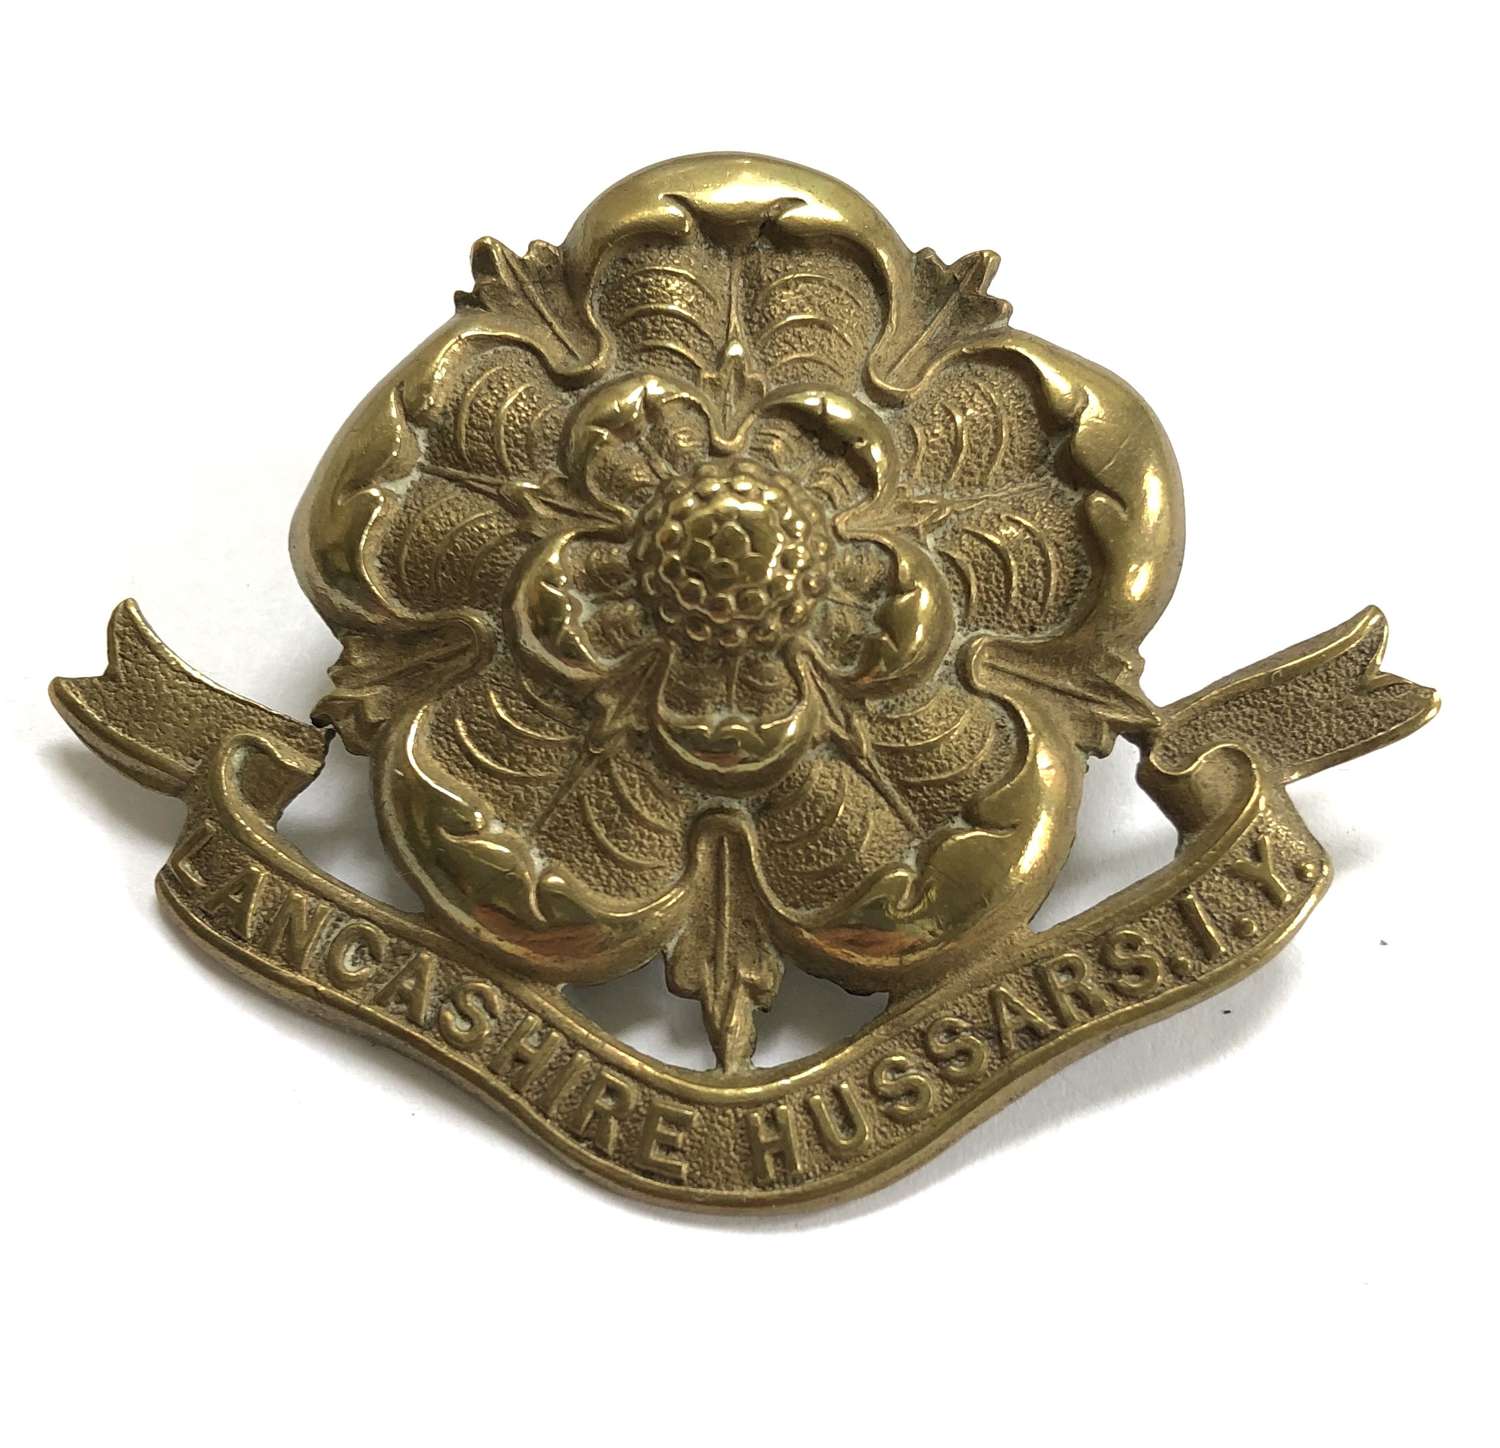 Lancashire Hussars Imperial Yeomanry cap badge